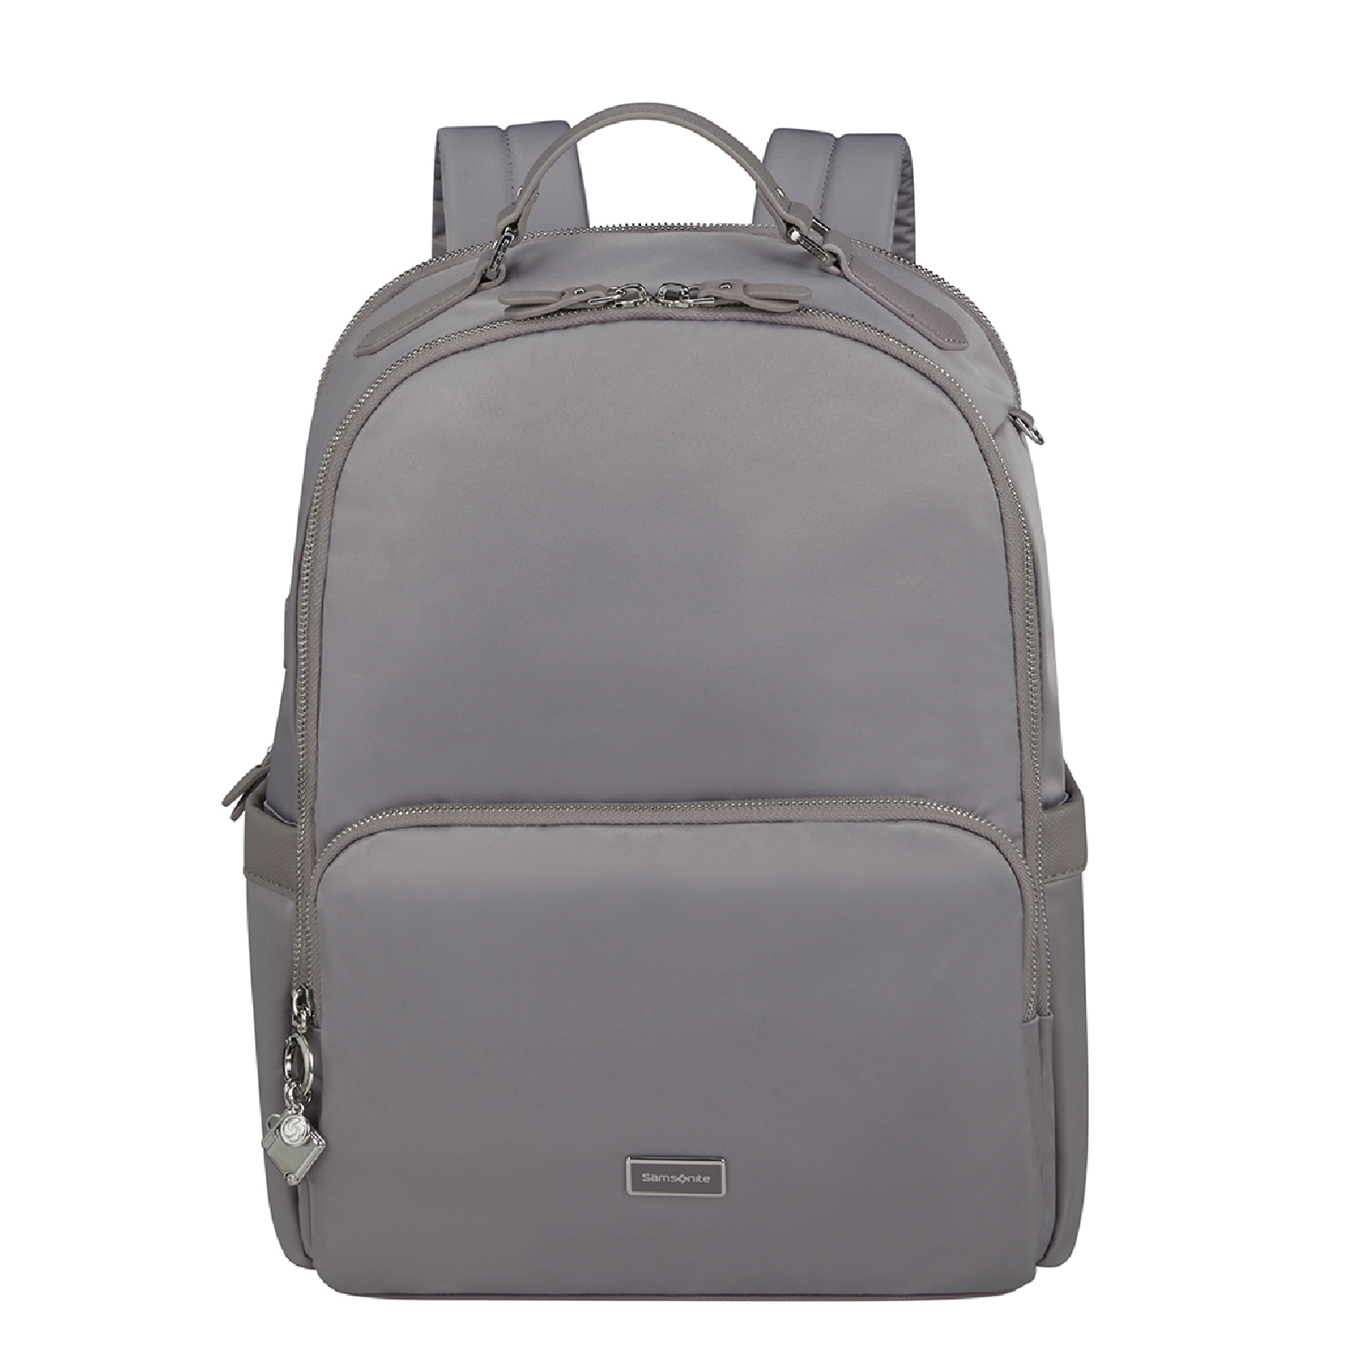 Samsonite Karissa Biz 2.0 Backpack 14.1'' lilac grey backpack - Tas2go